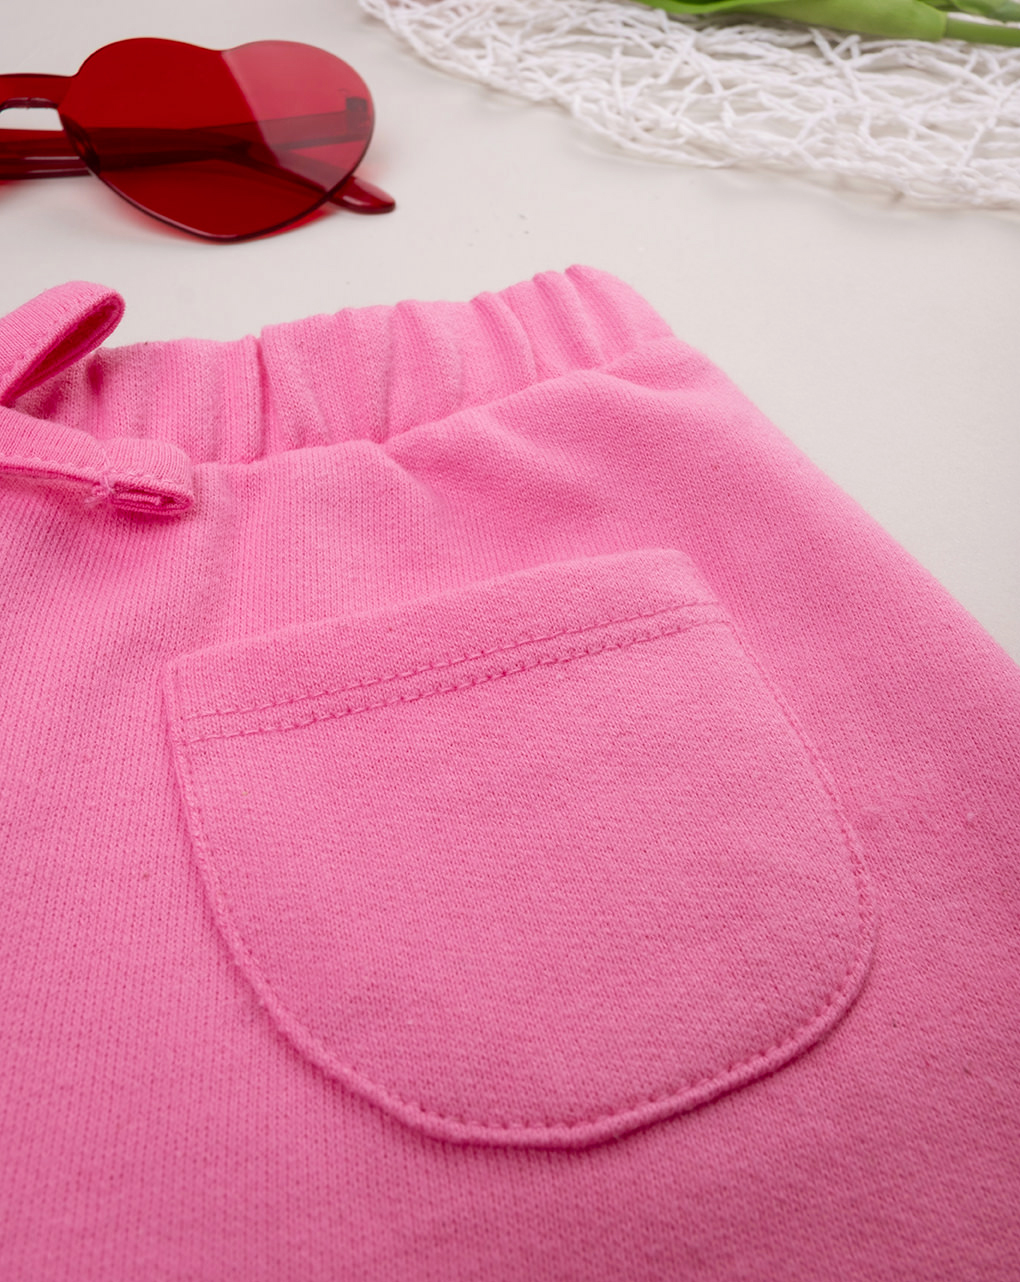 Pantalone bimba rosa - Prénatal